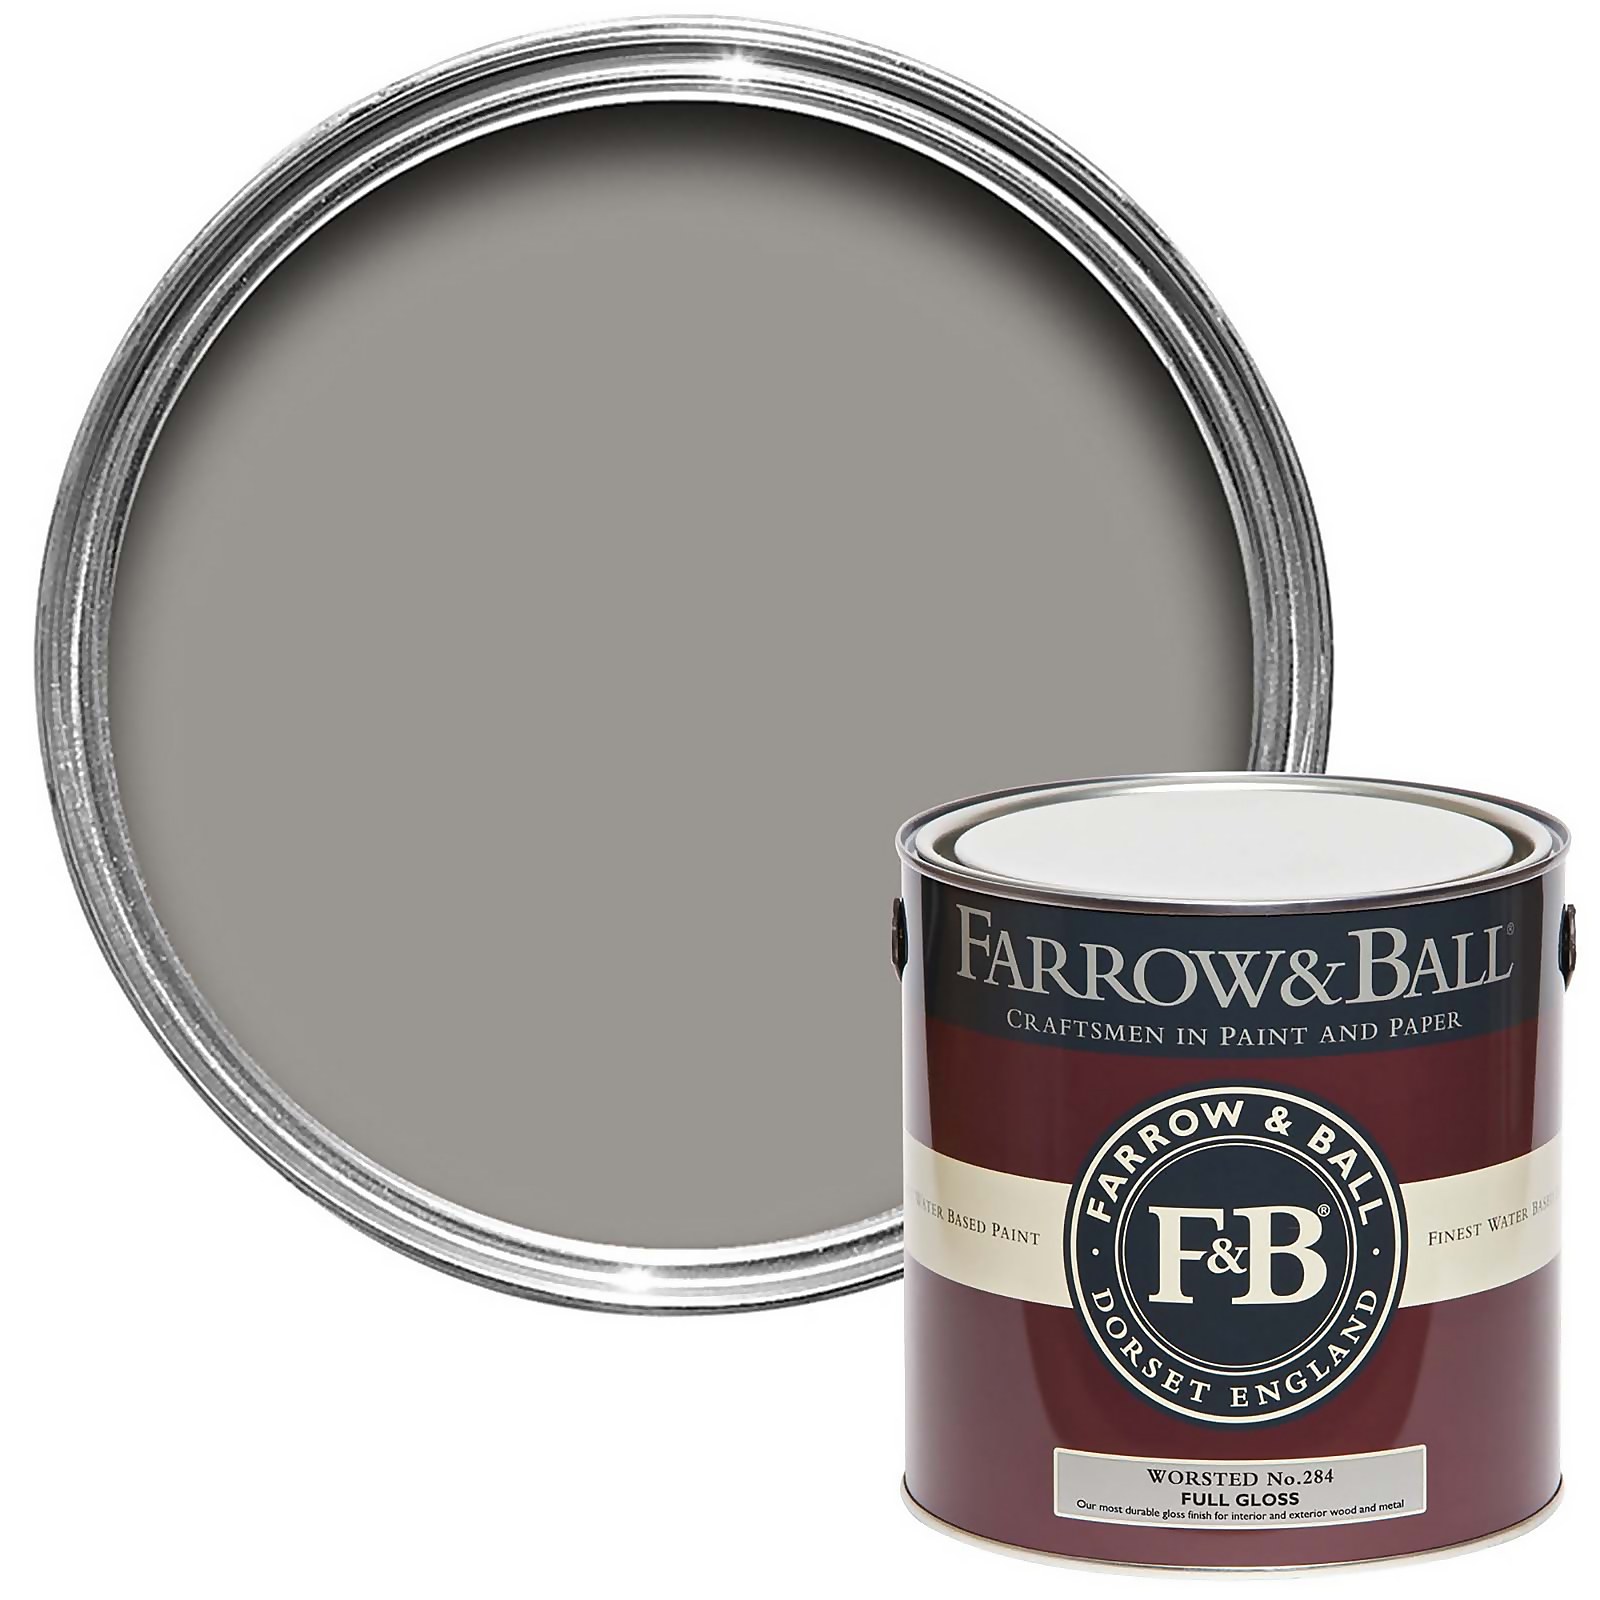 Farrow & Ball Full Gloss Paint Worsted No.284 - 2.5L